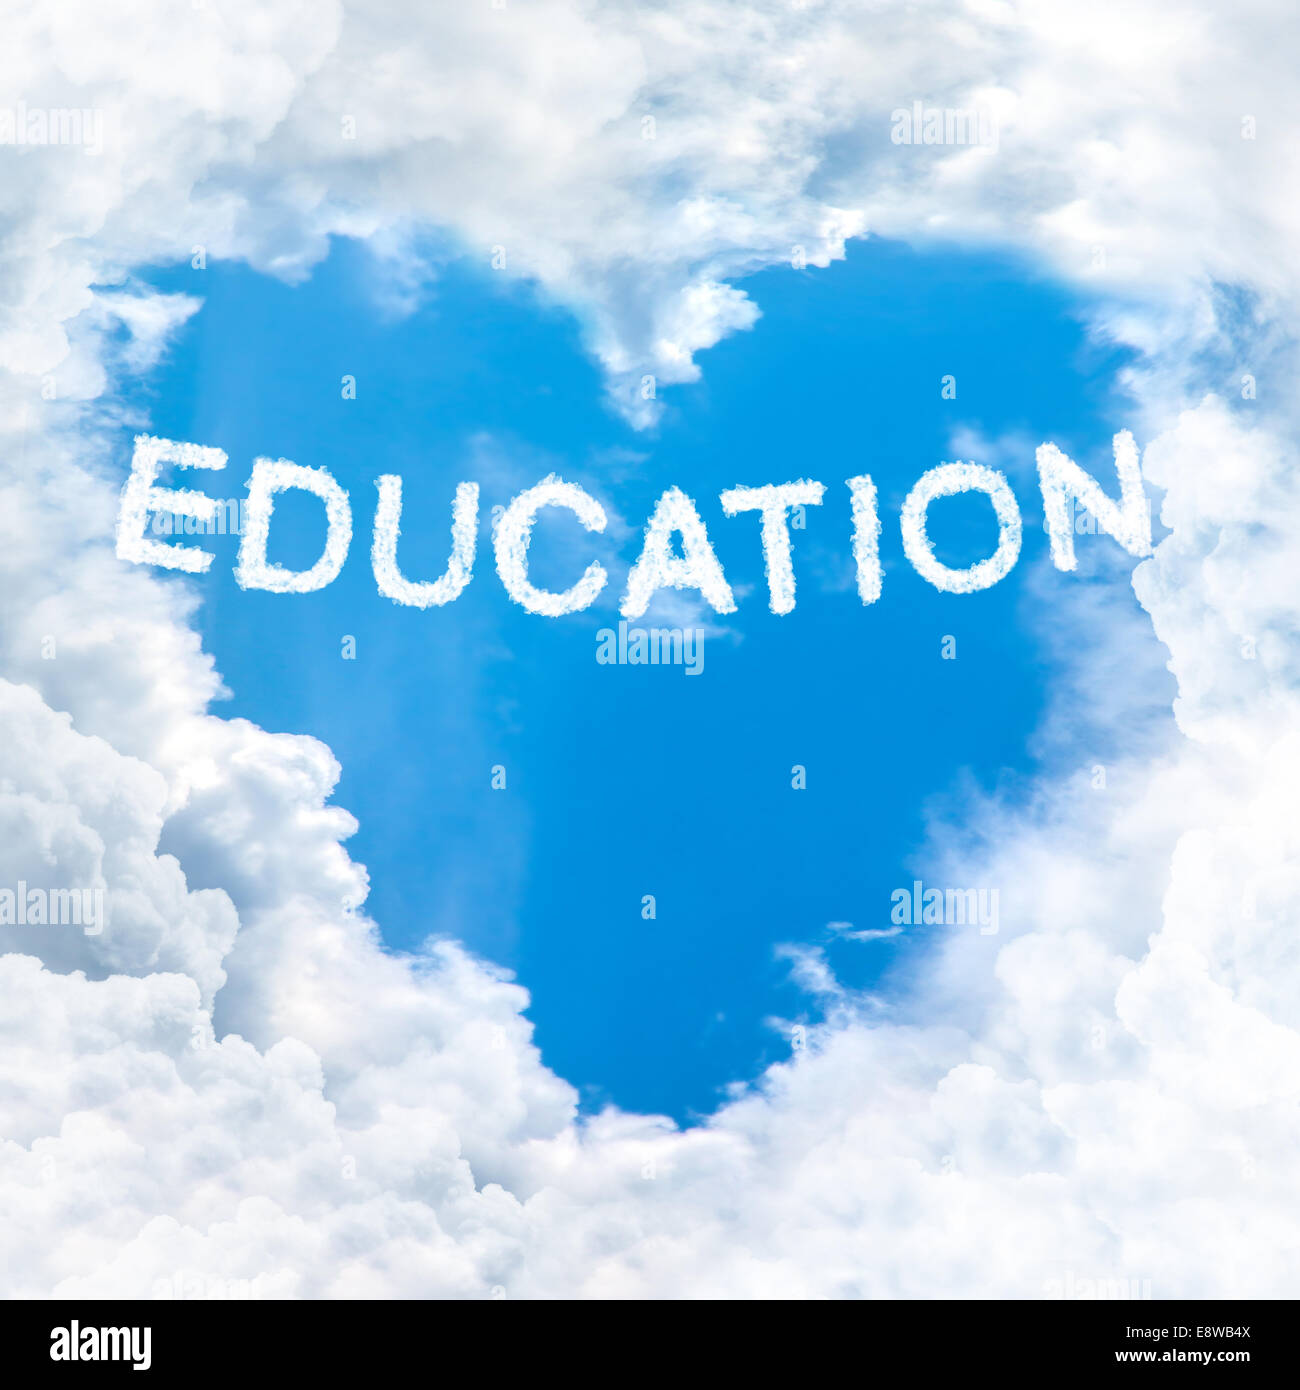 education word on blue sky inside heart cloud form Stock Photo